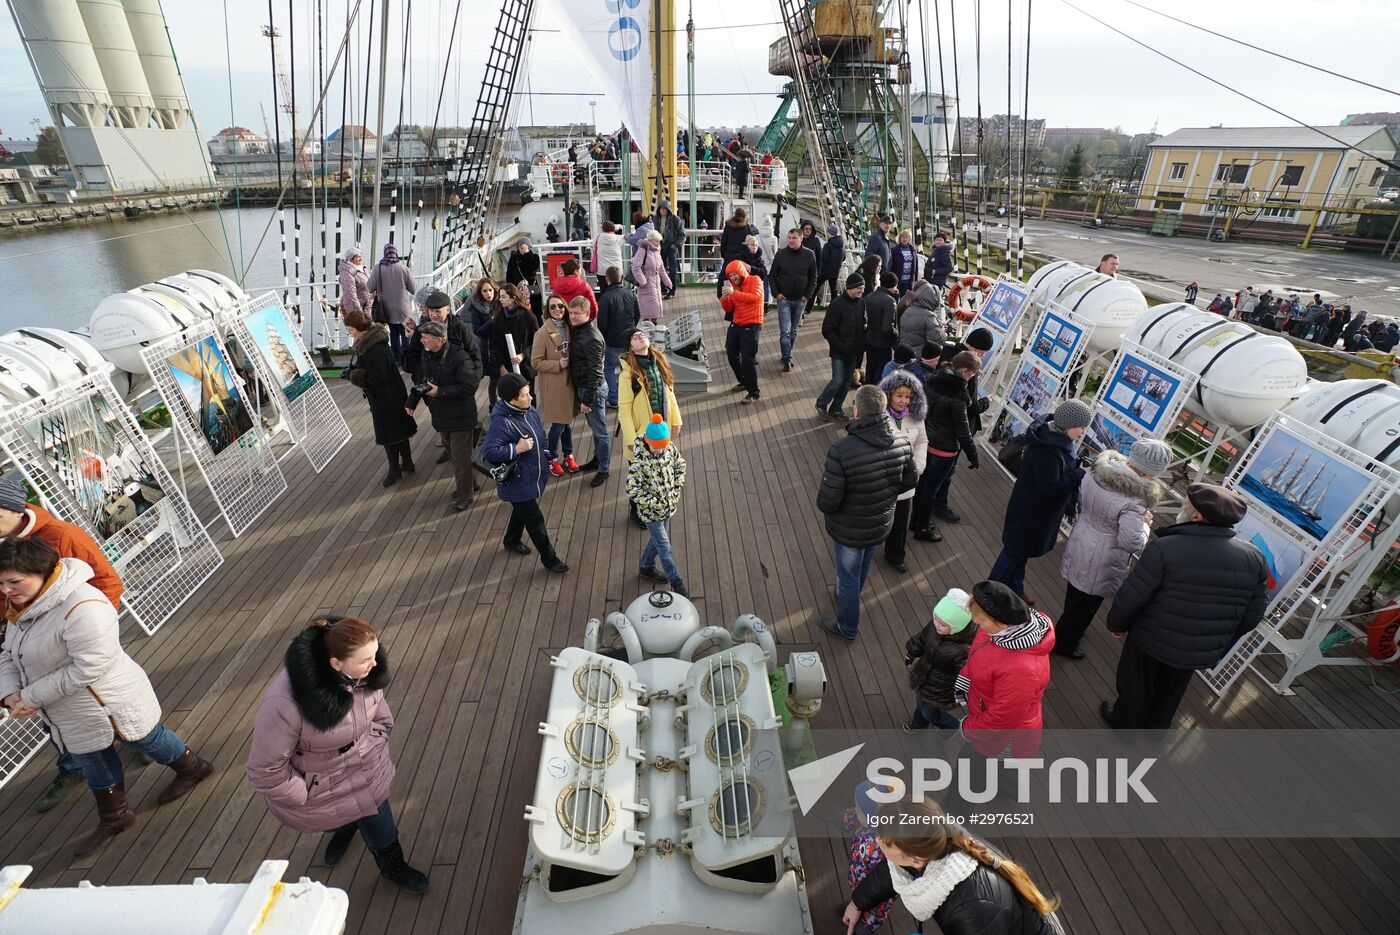 Activities to celebrate Kruzenshtern barque's 90th anniversary in Kaliningrad